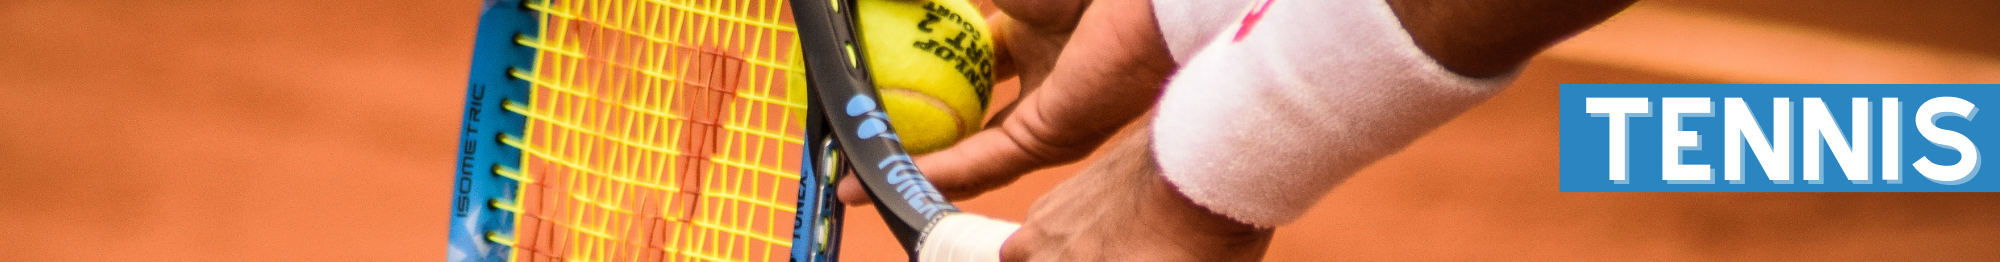 Tennis16